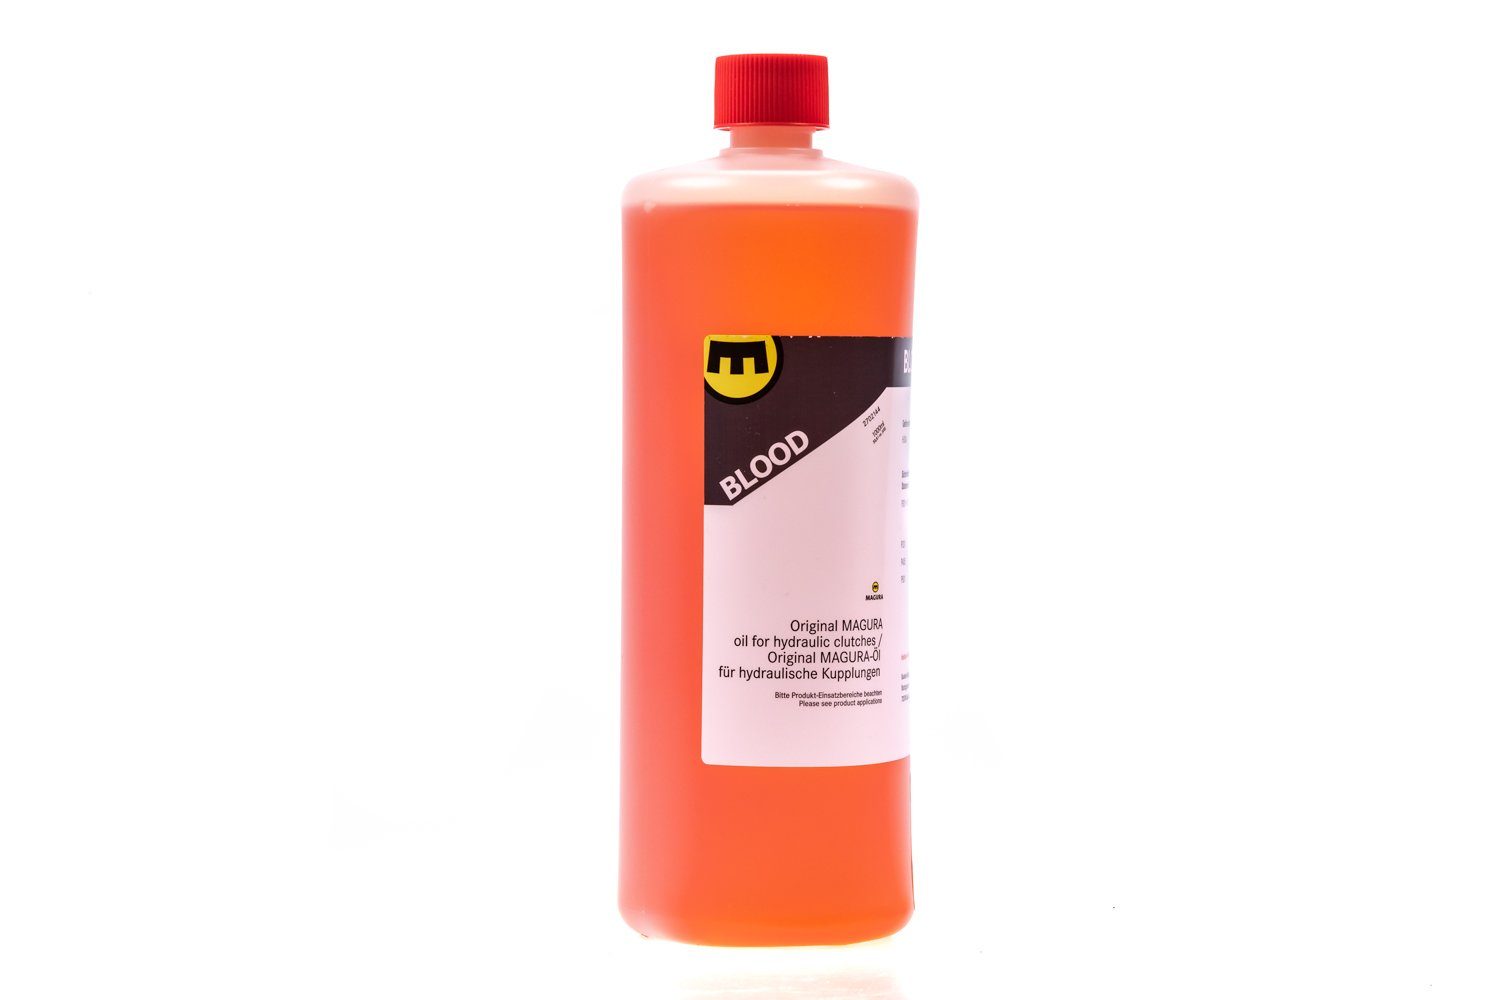 Magura Felgenbremse Magura Blood Kupplung Öl Bio-Hydraulik Öl 1000ml clutch fluid oil ROT